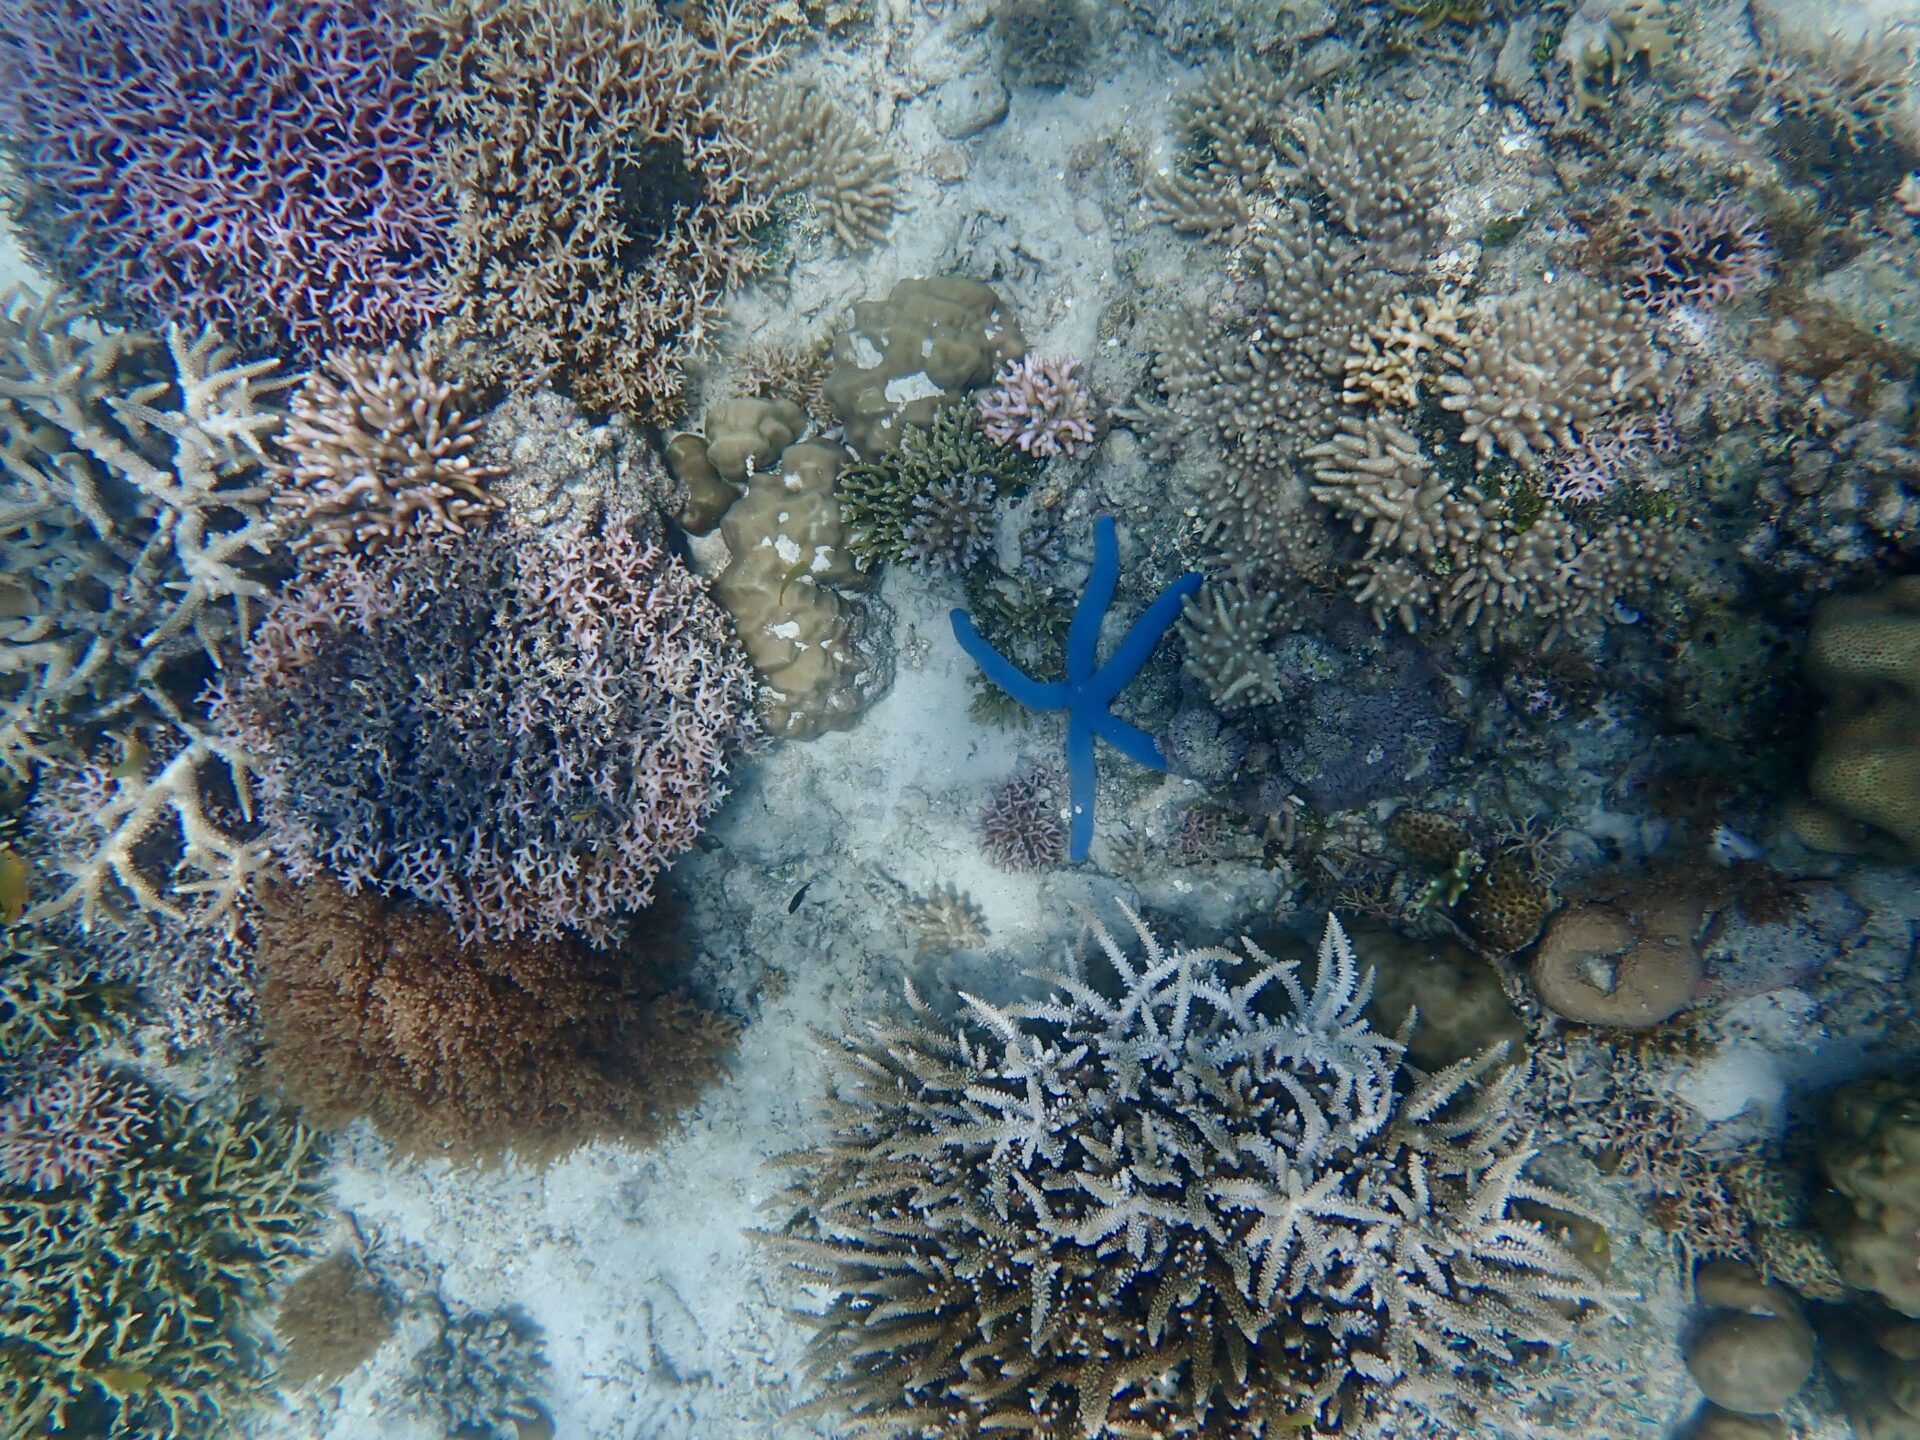 hard-corals-blue-sea-star-bahura-dive-siquijor